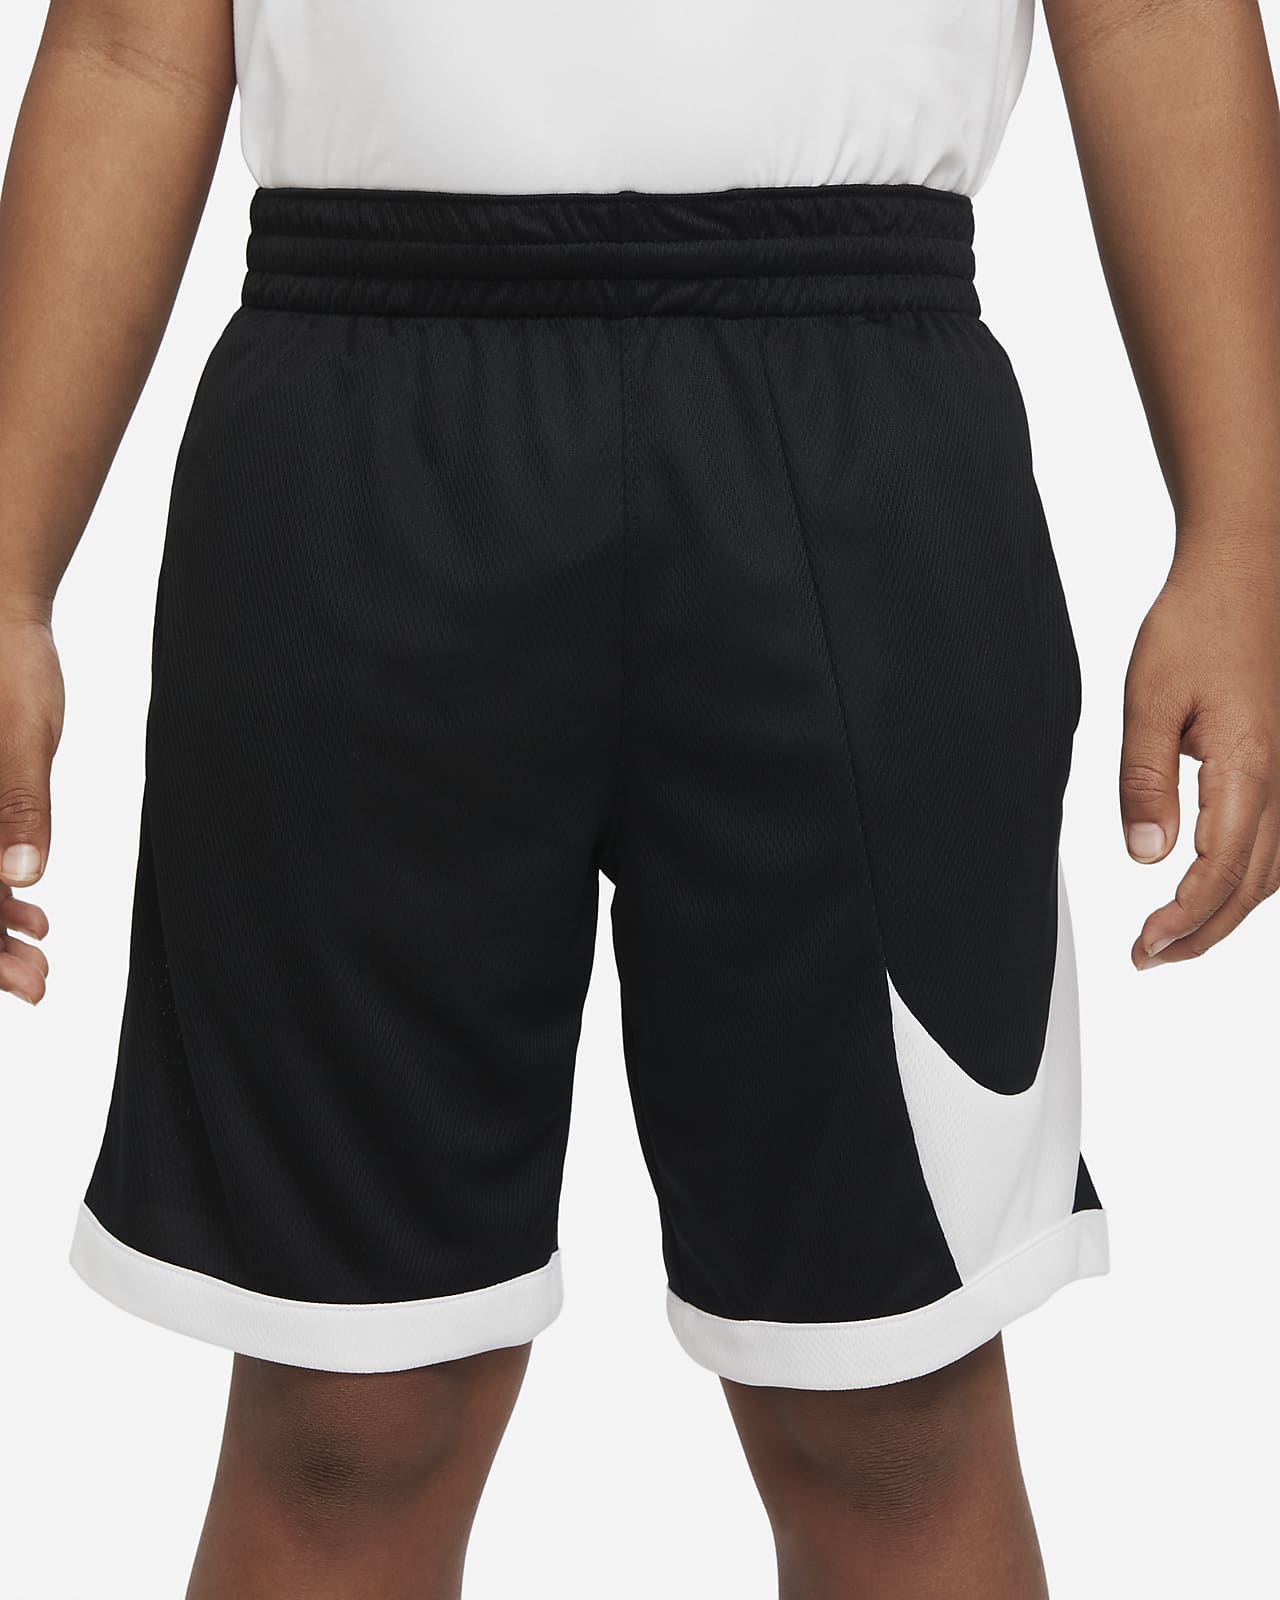 Nike Dri-FIT basketshorts til store barn (gutt)